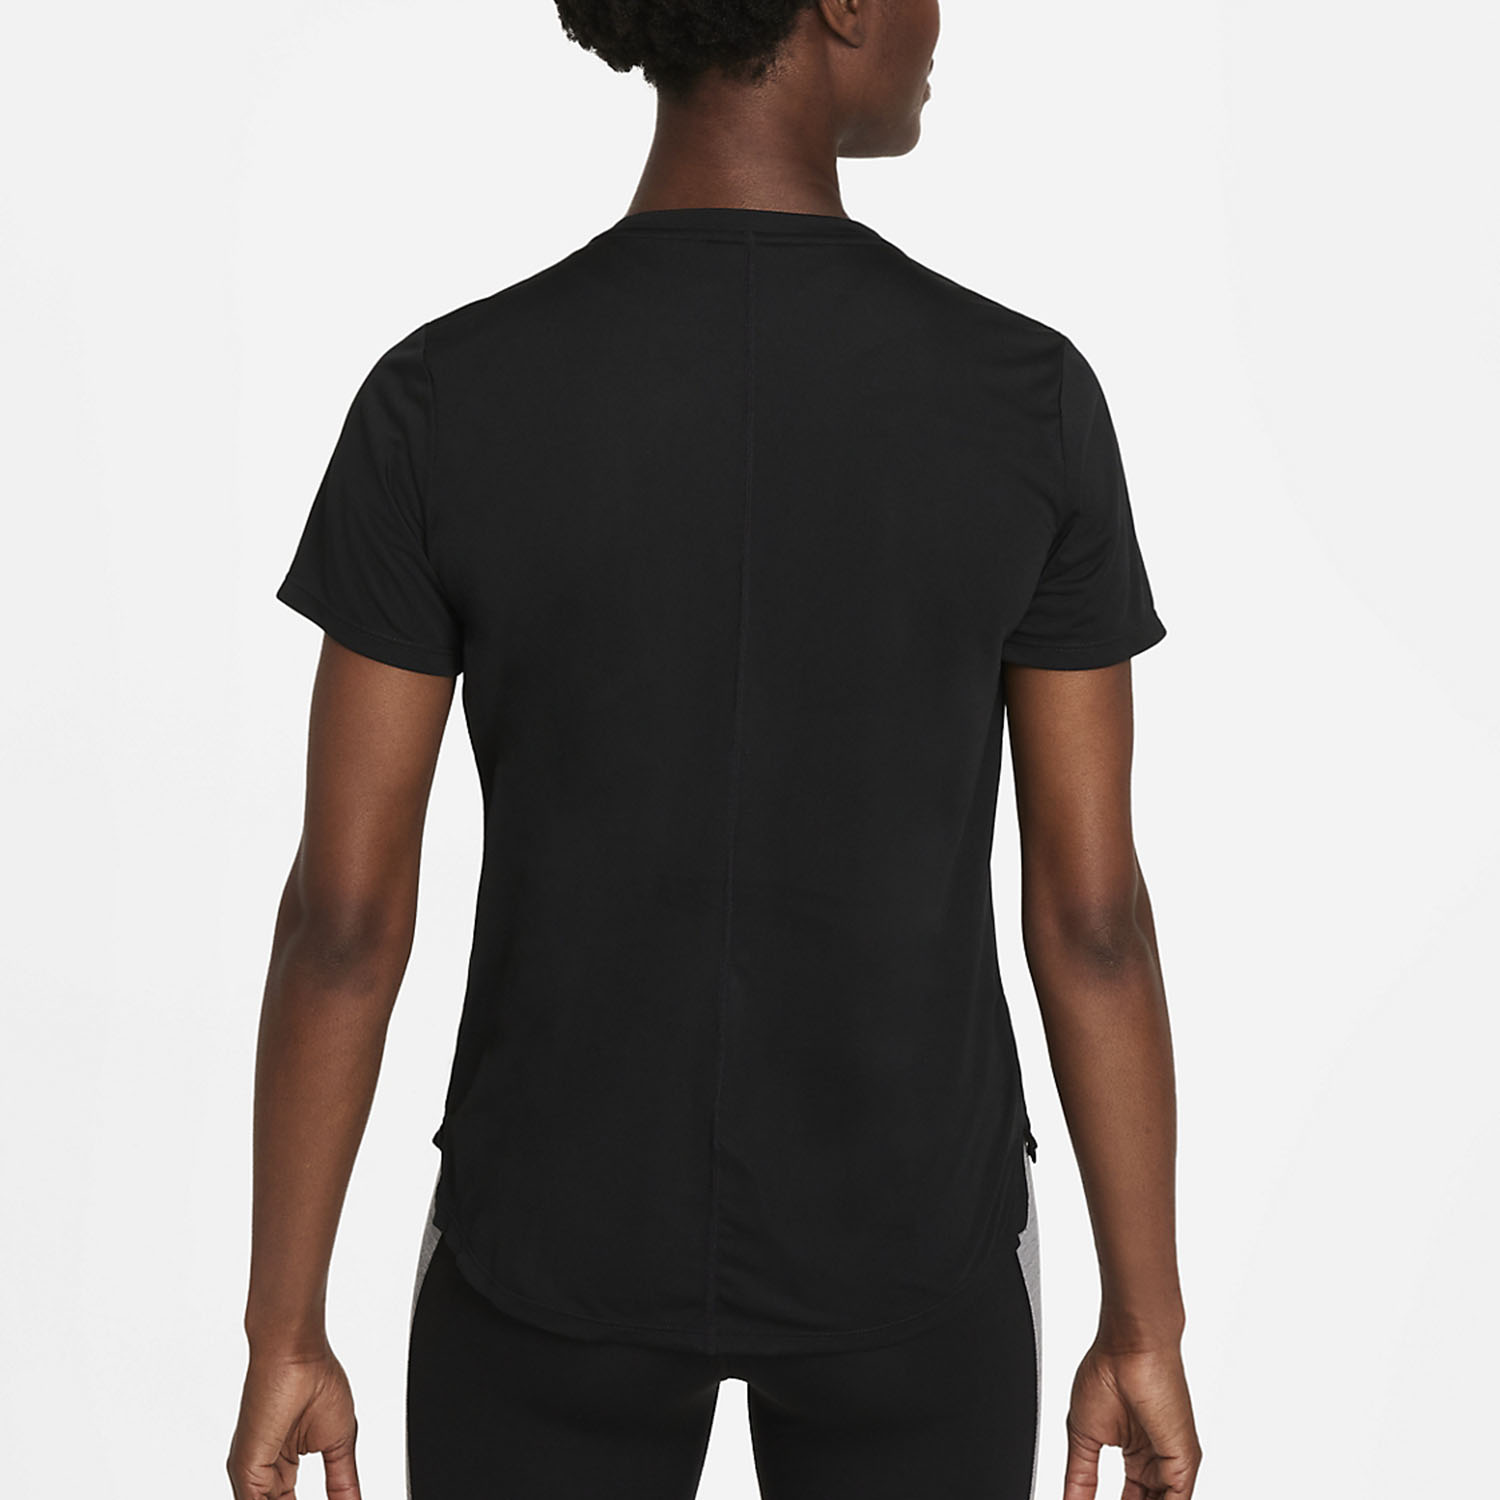 Nike One Dri-FIT Logo Women's Training T-Shirt - Black/White